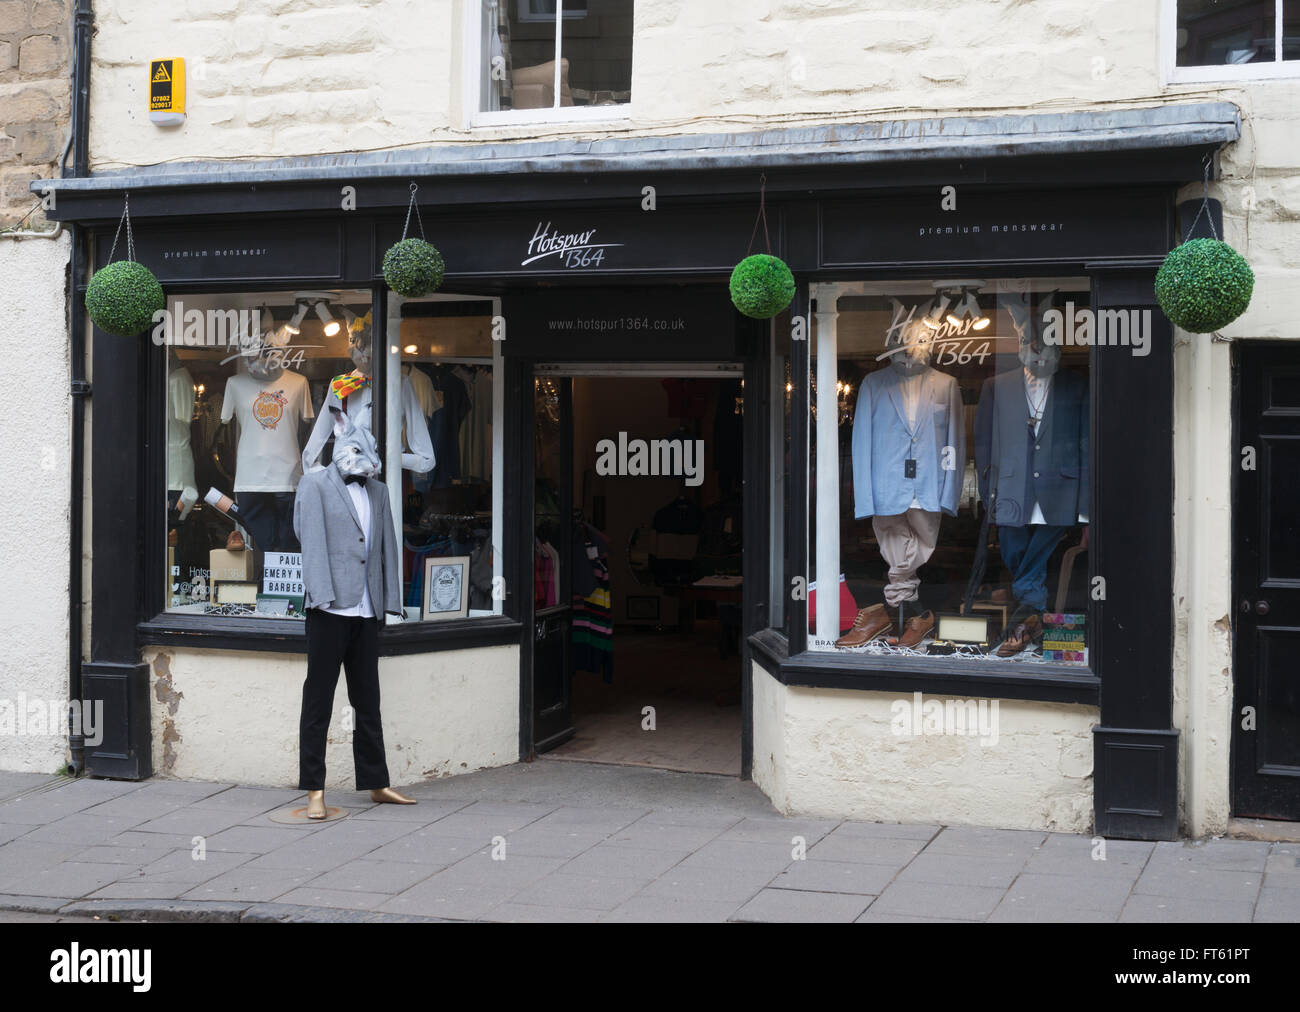 Hotspur 1364 menswear shop Alnwick, Northumberland, England, UK Stock Photo